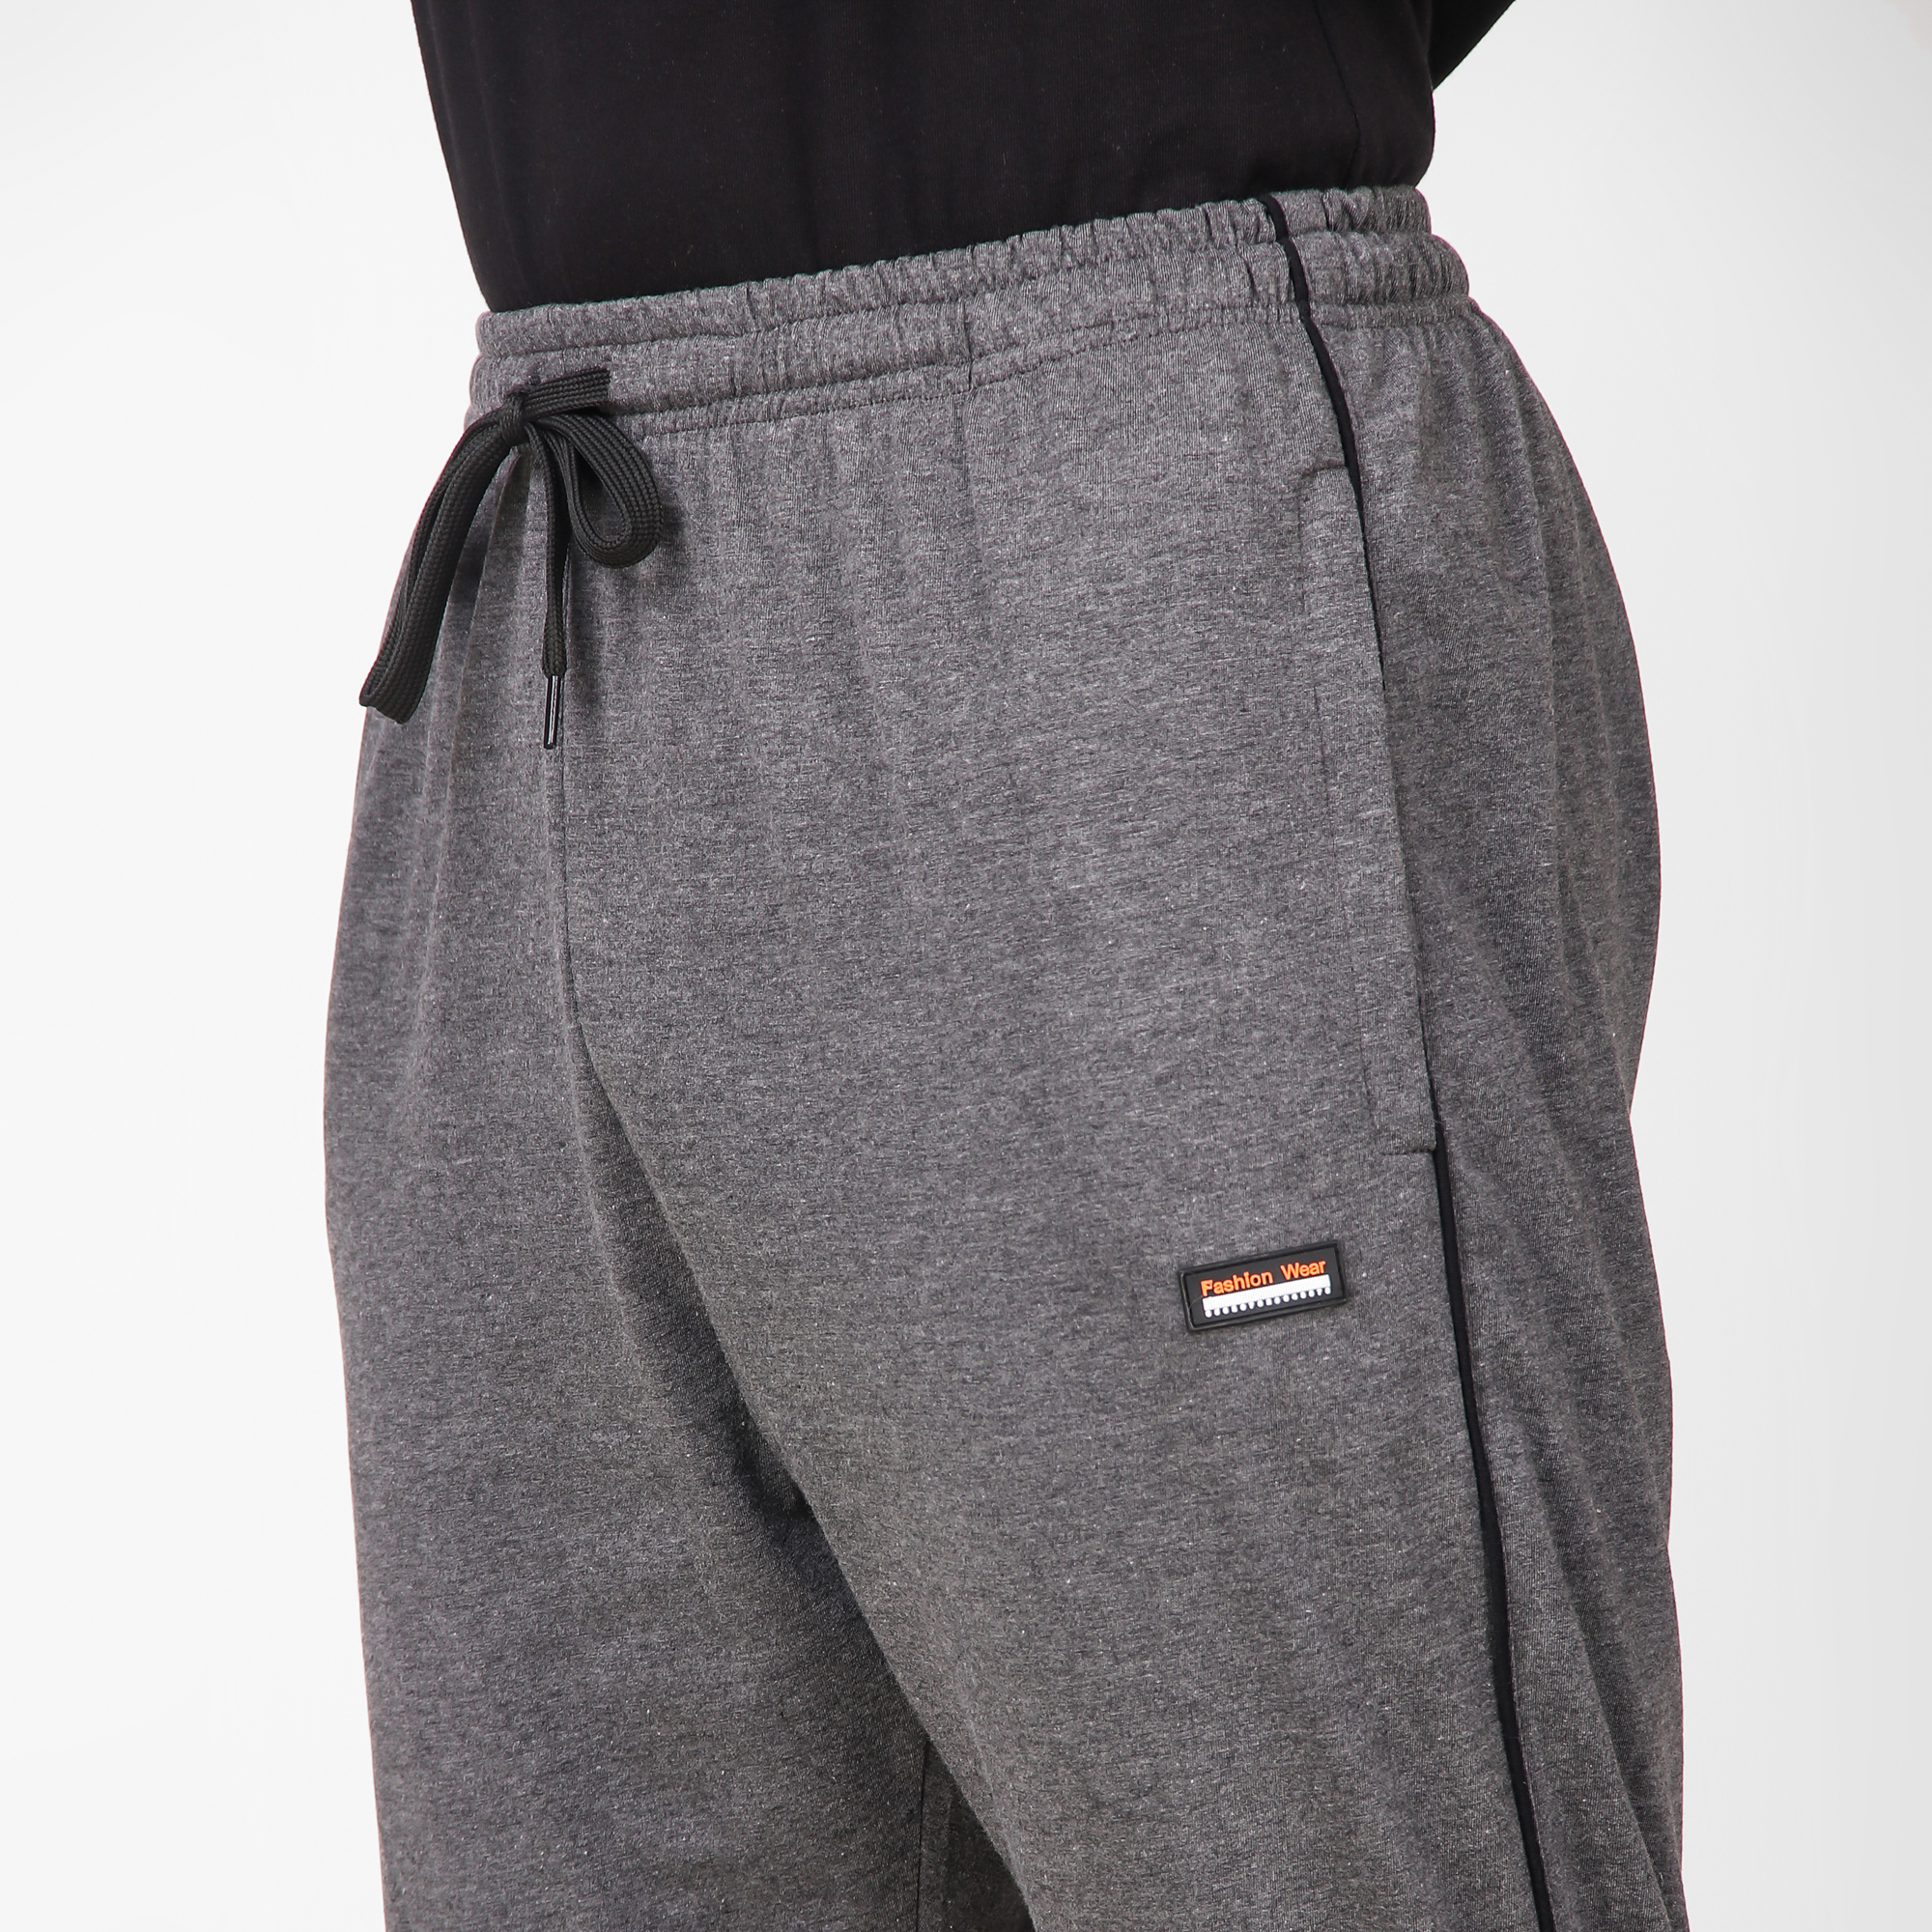 Cotton Track Pants for Men's (Dark Grey)